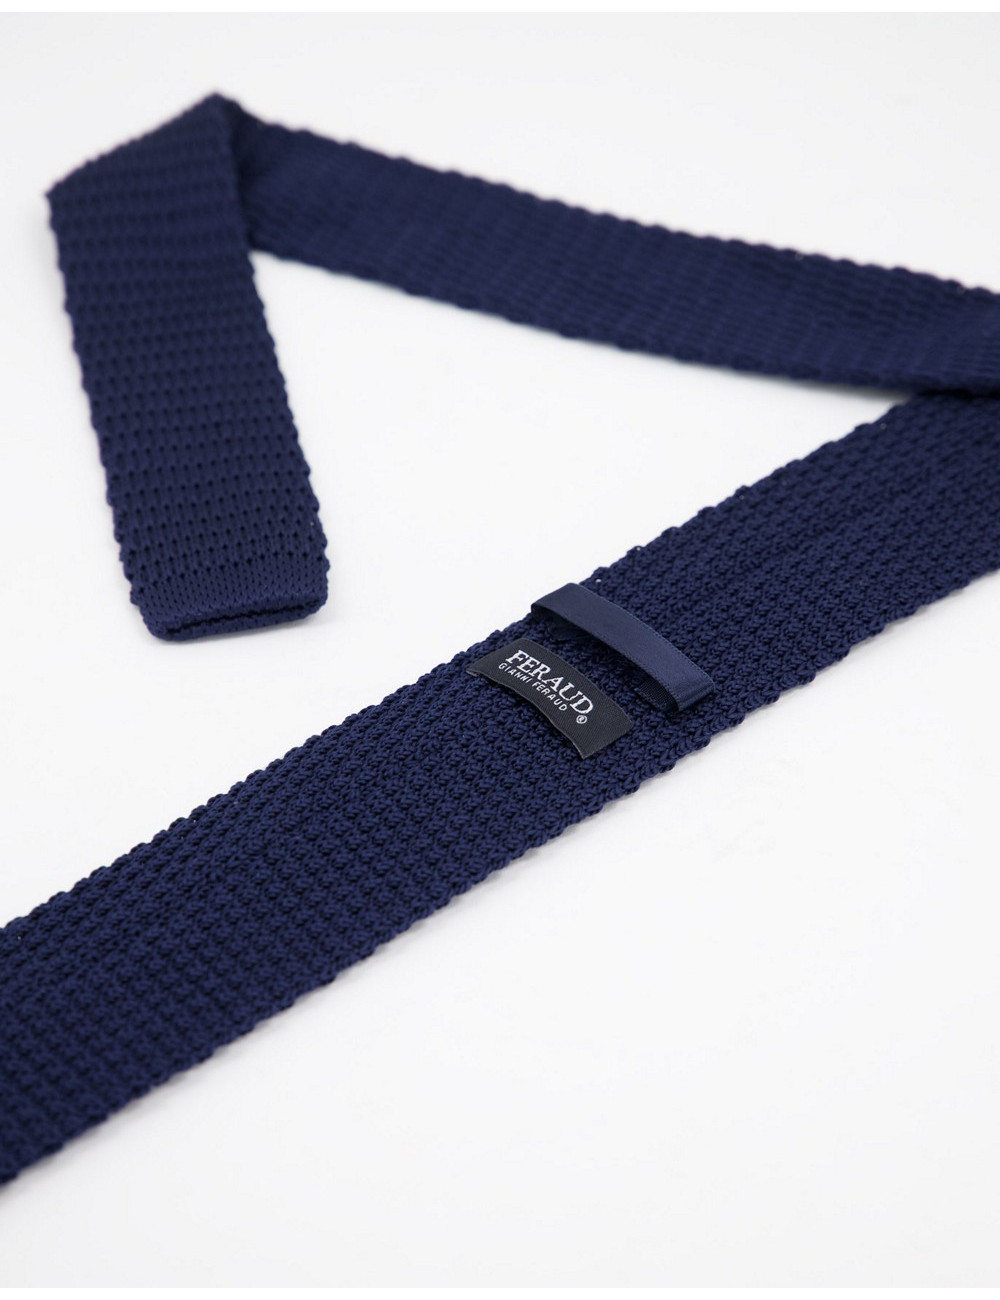 Gianni Feraud knitted spot tie